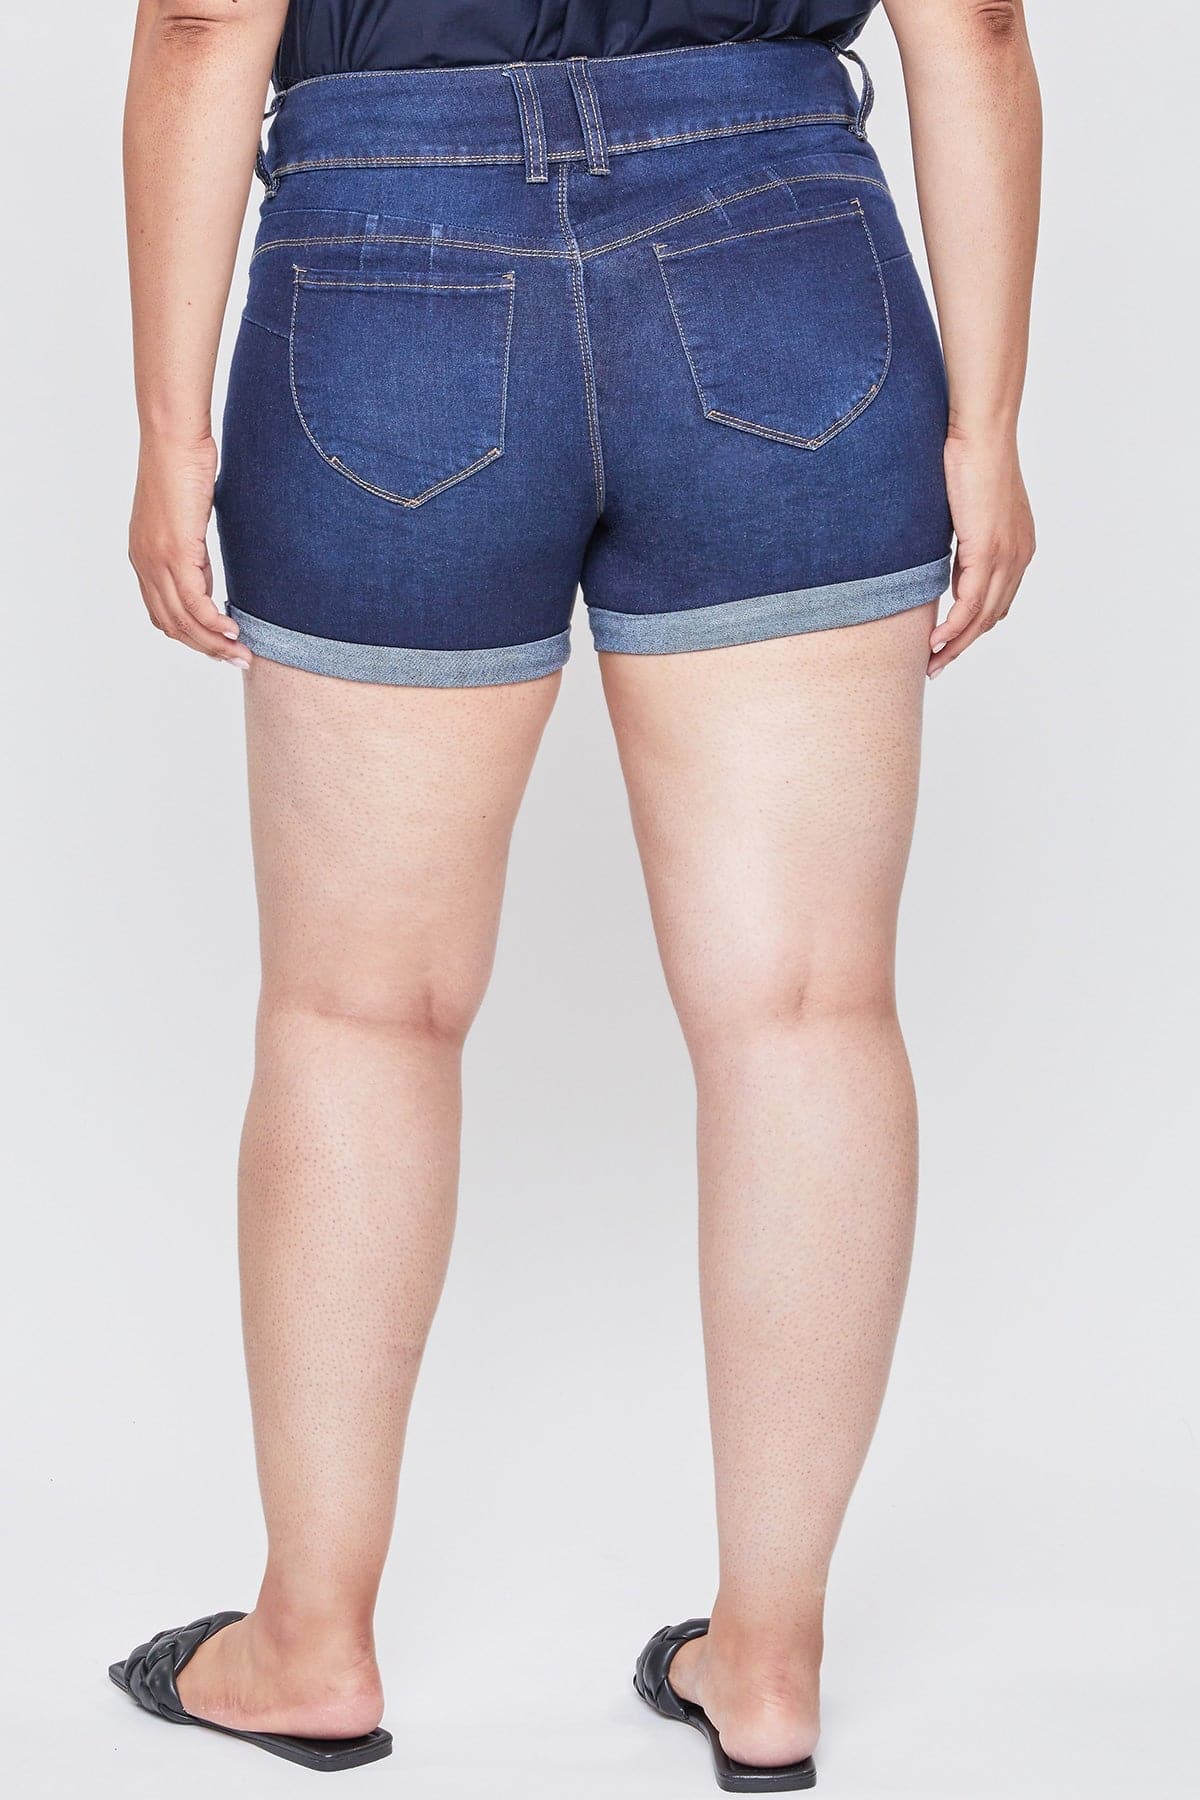 Women's Plus Size Curvy Fit High Rise Cuffed Shorts